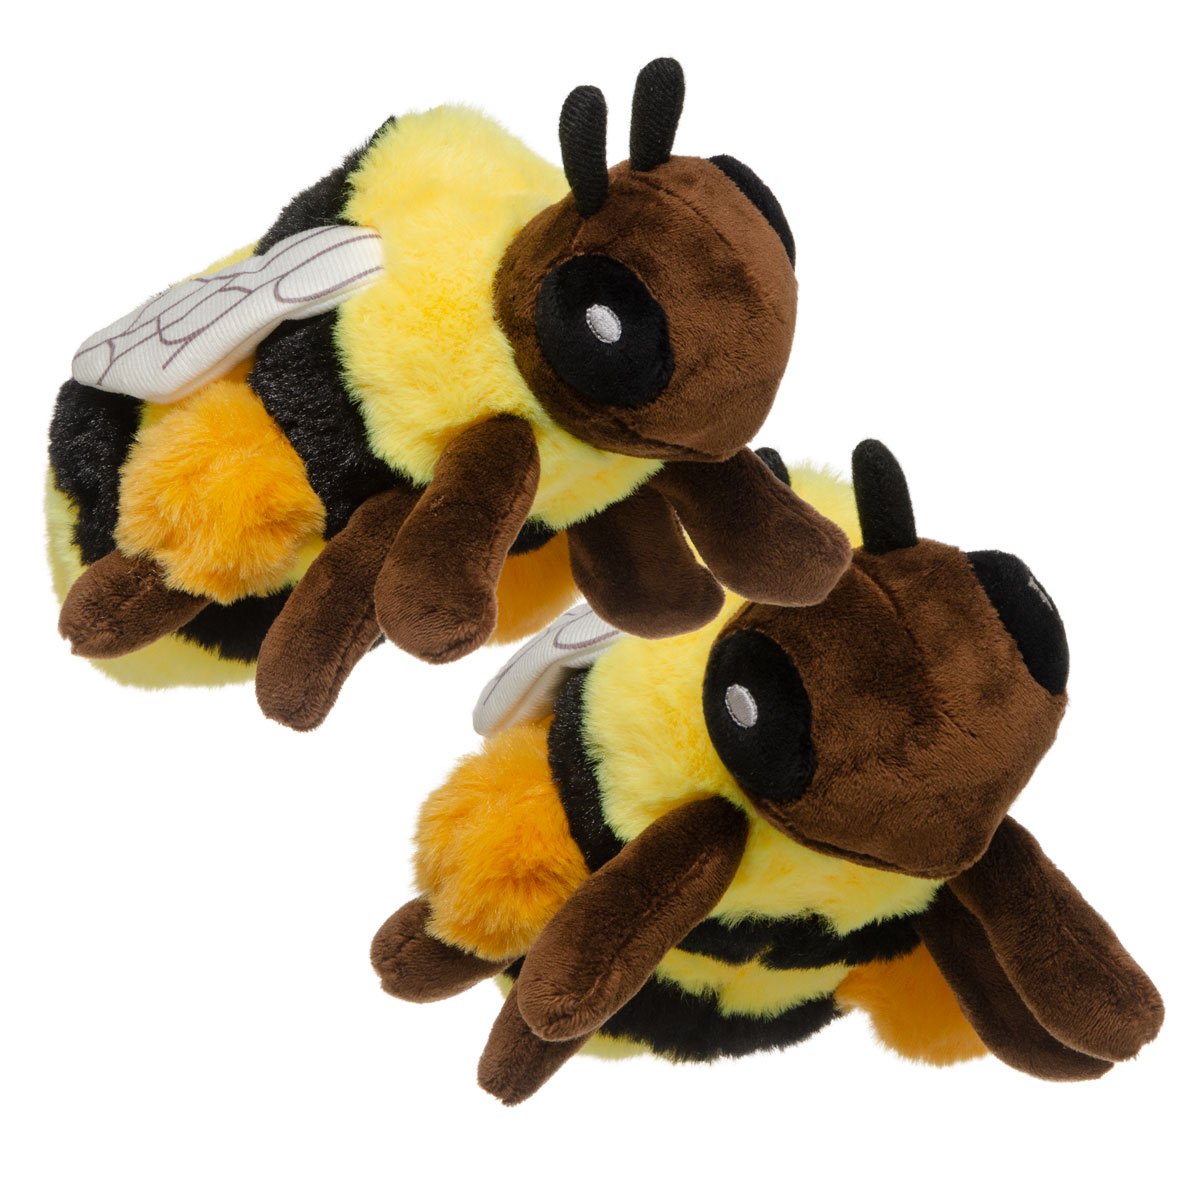 Adopt a Honeybee  Symbolic Adoptions from WWF